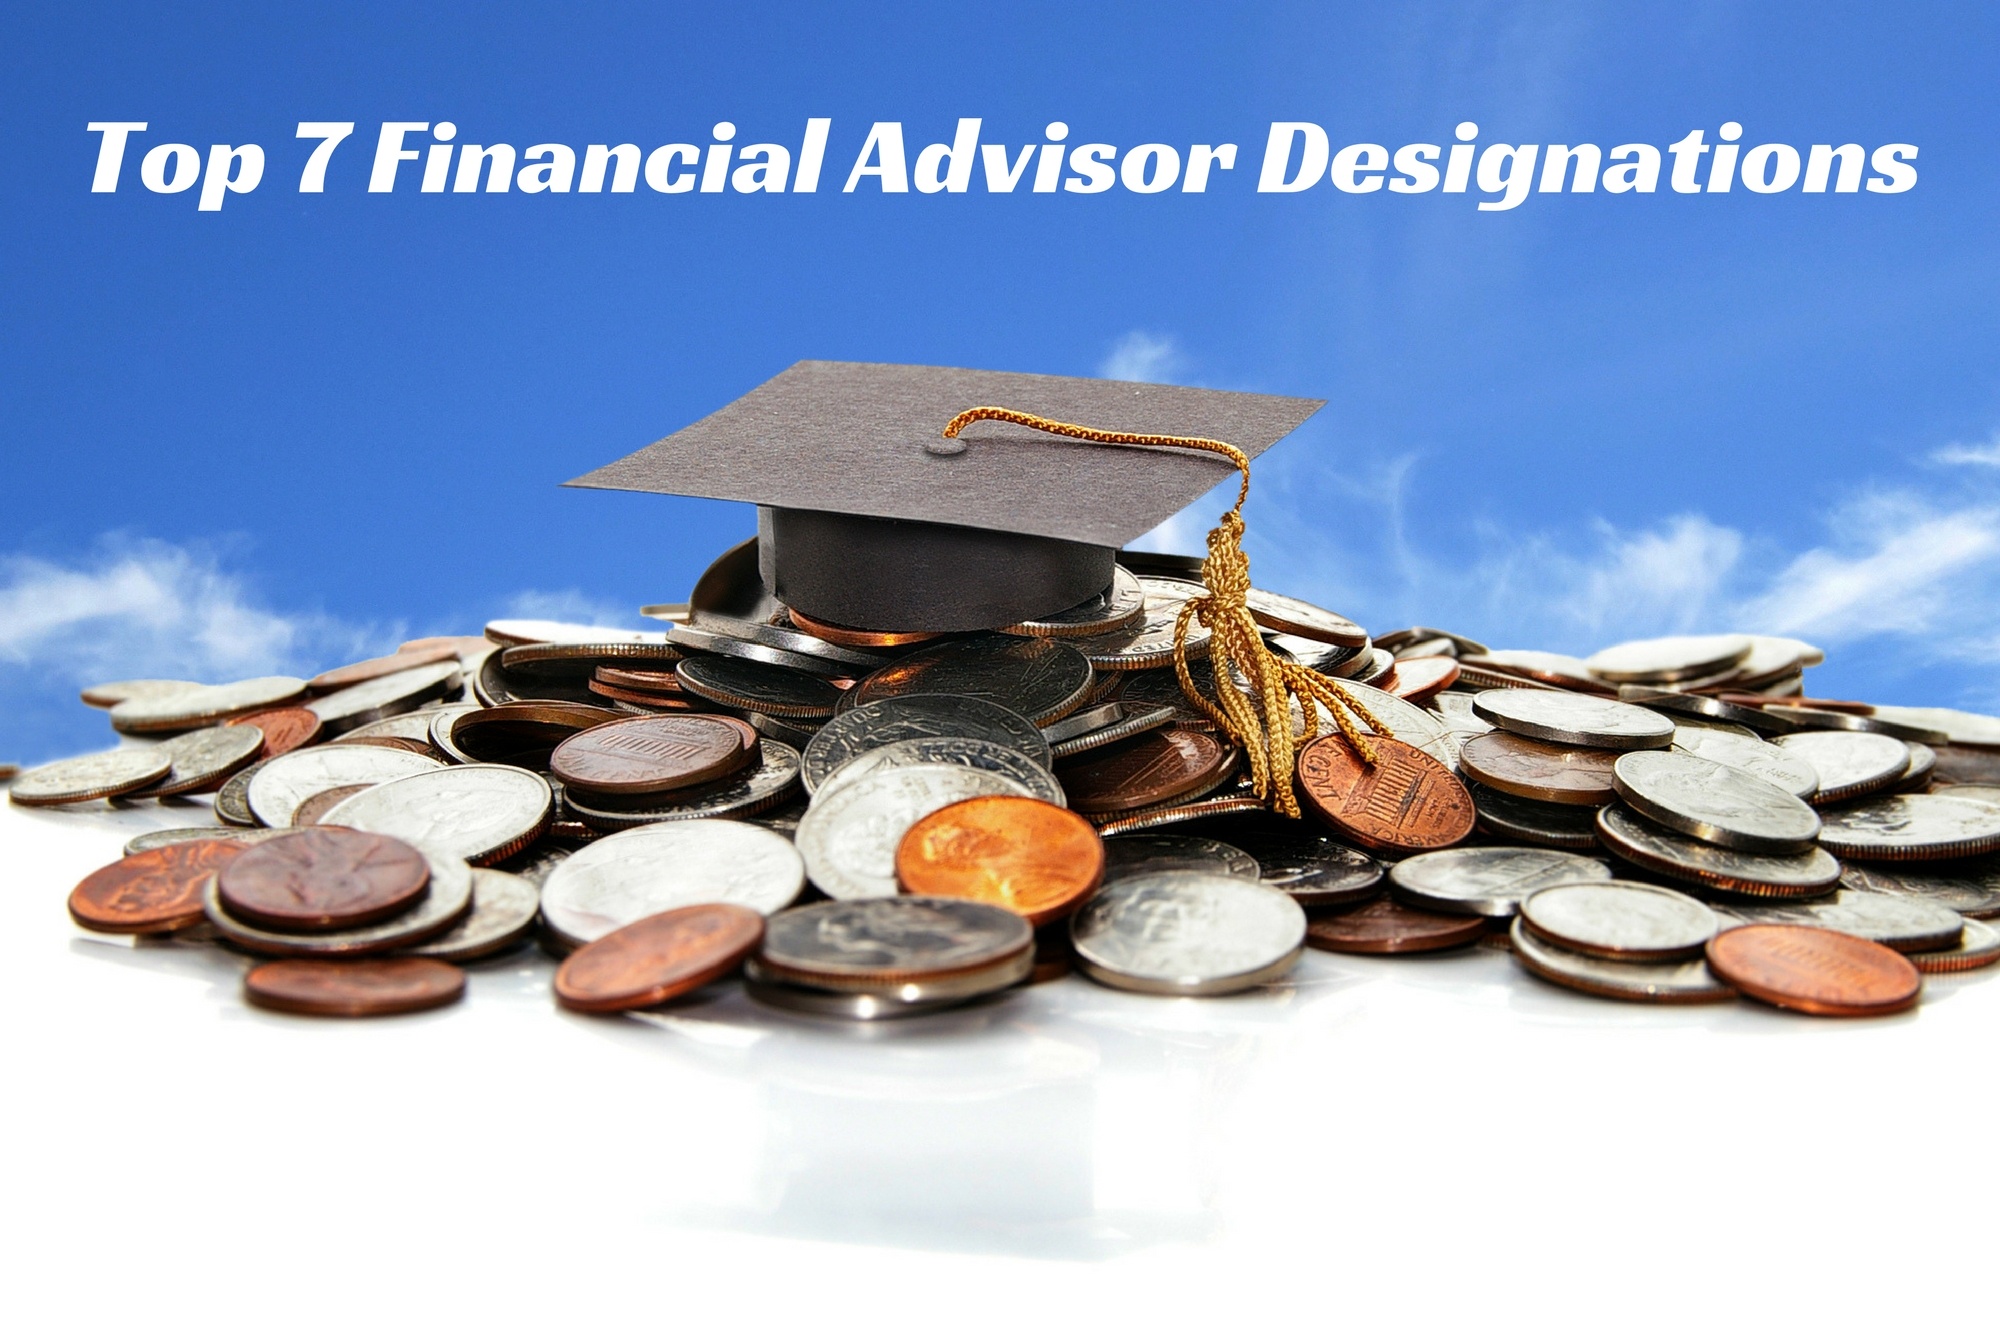 Top 7 Financial Advisor Designations